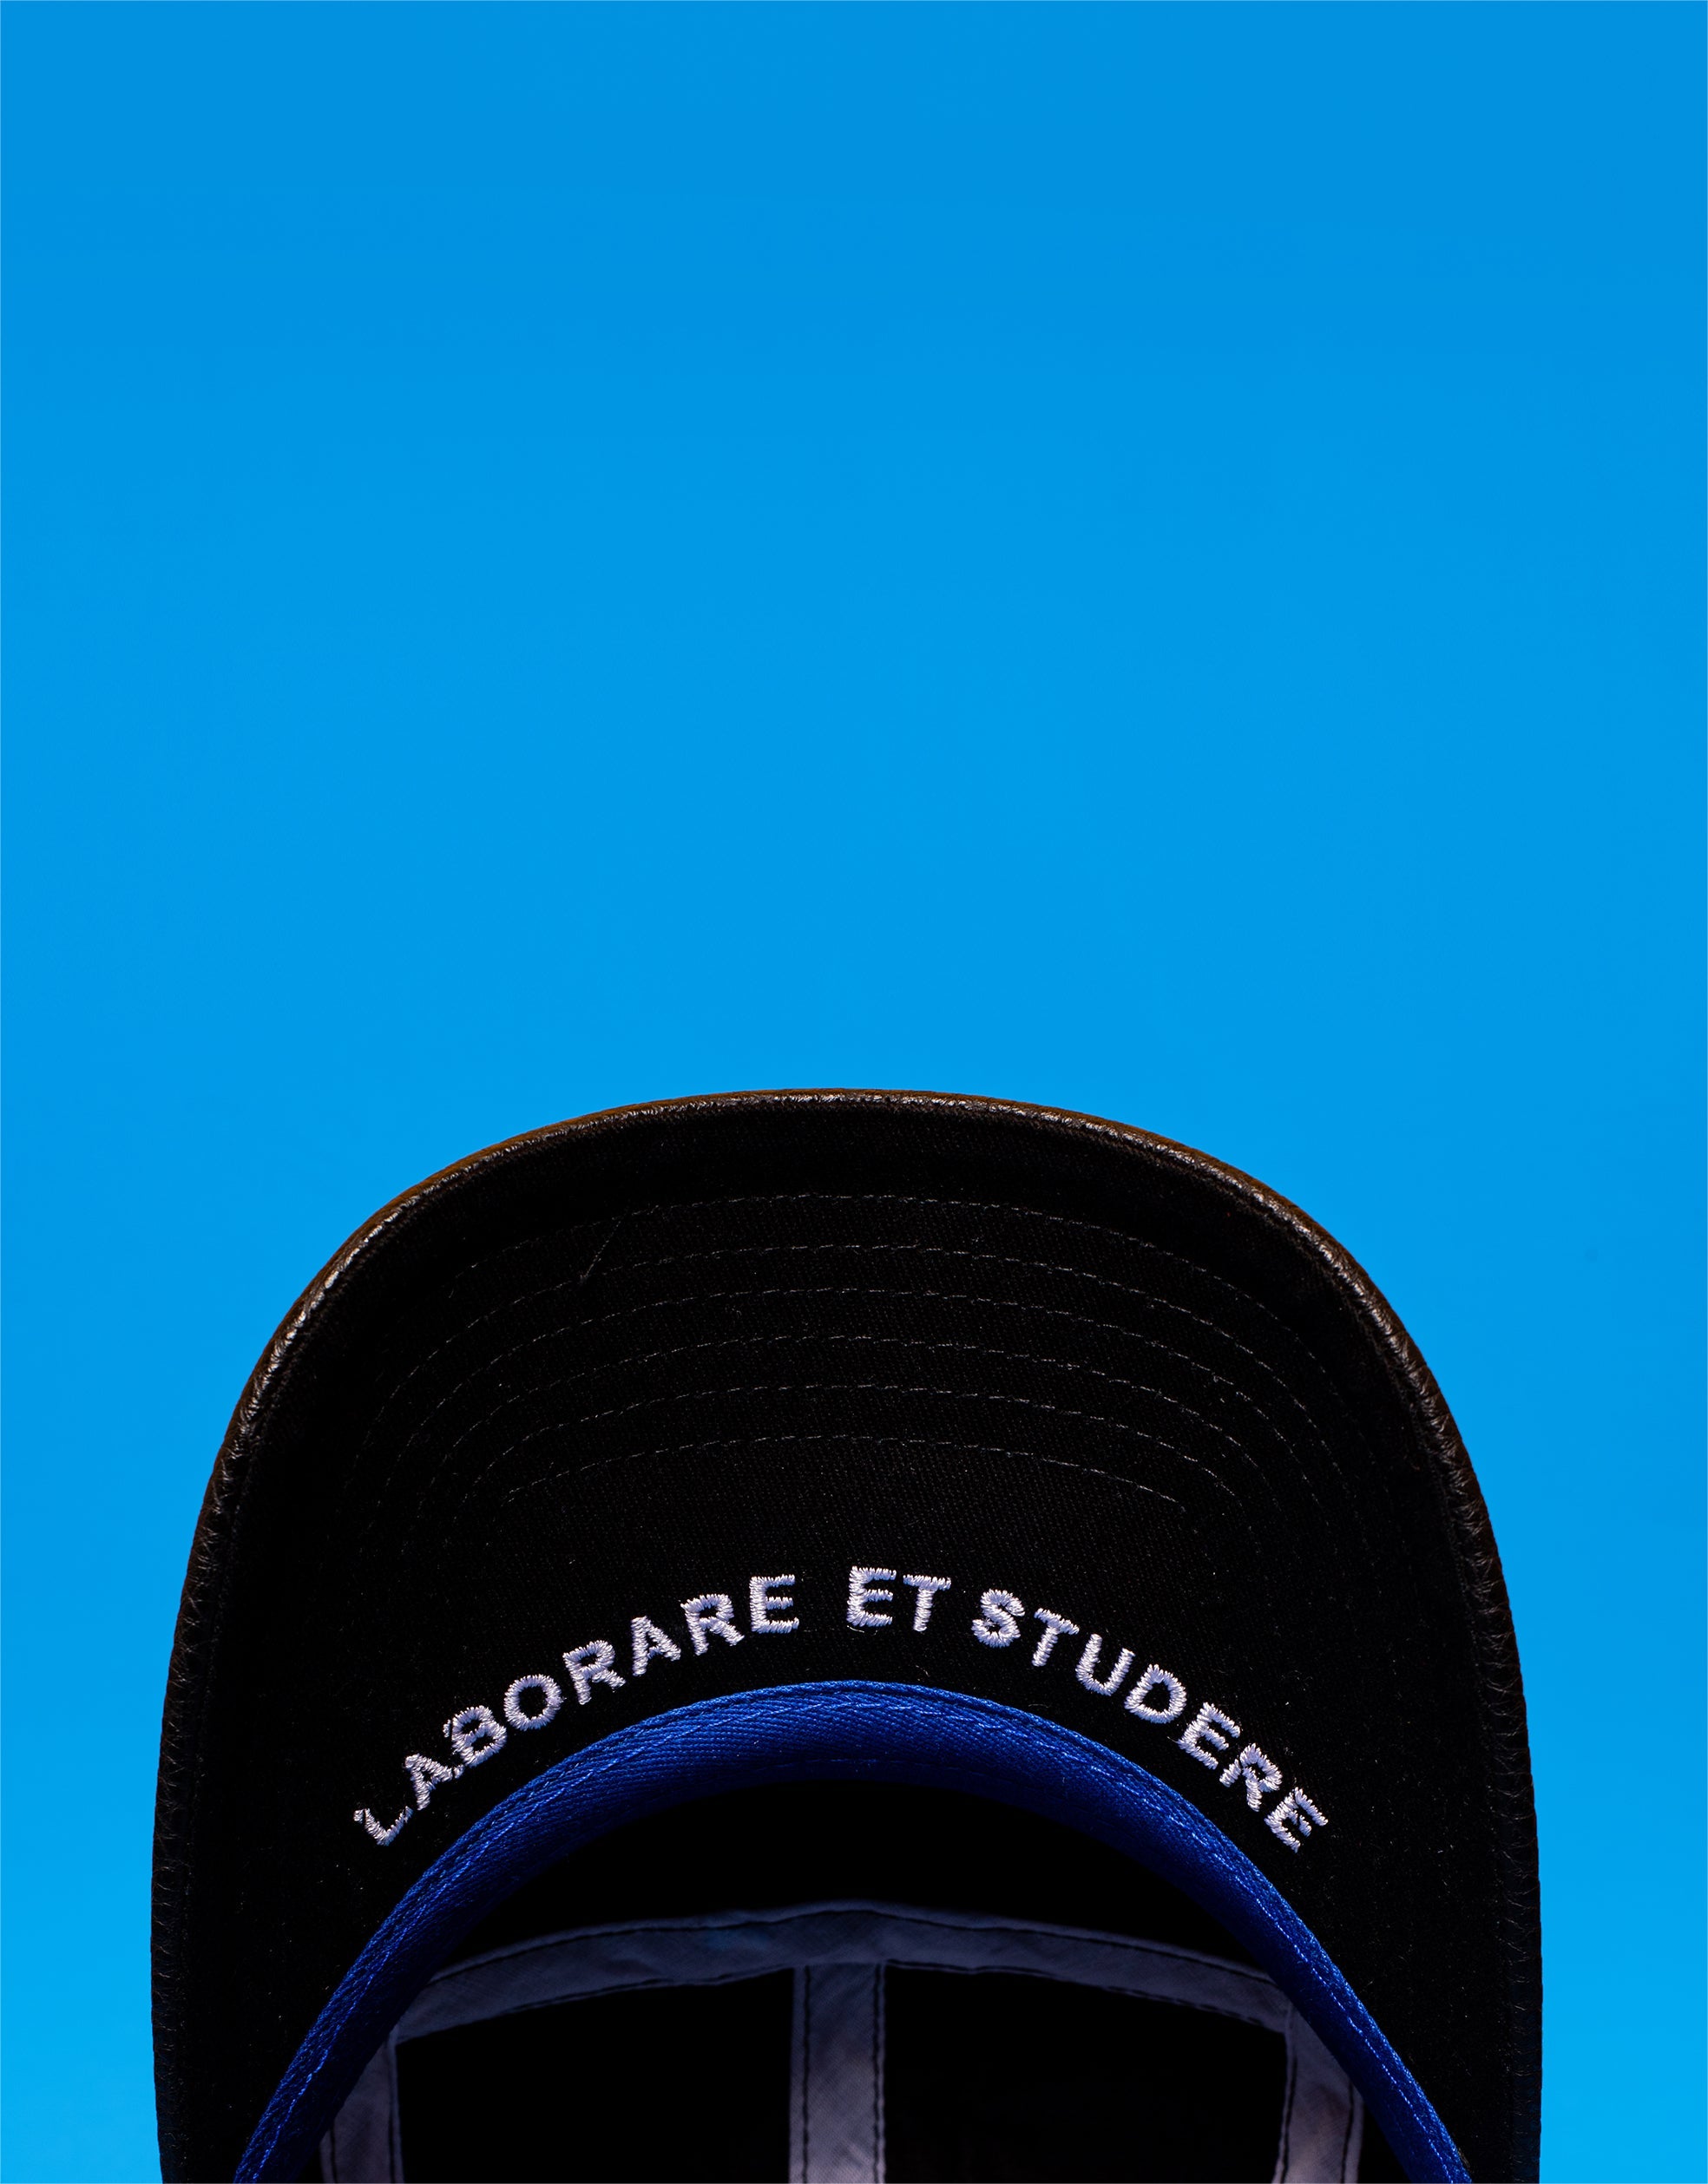 TheYard - BLACKOUT - Lincoln University of Missouri - HBCU Hat